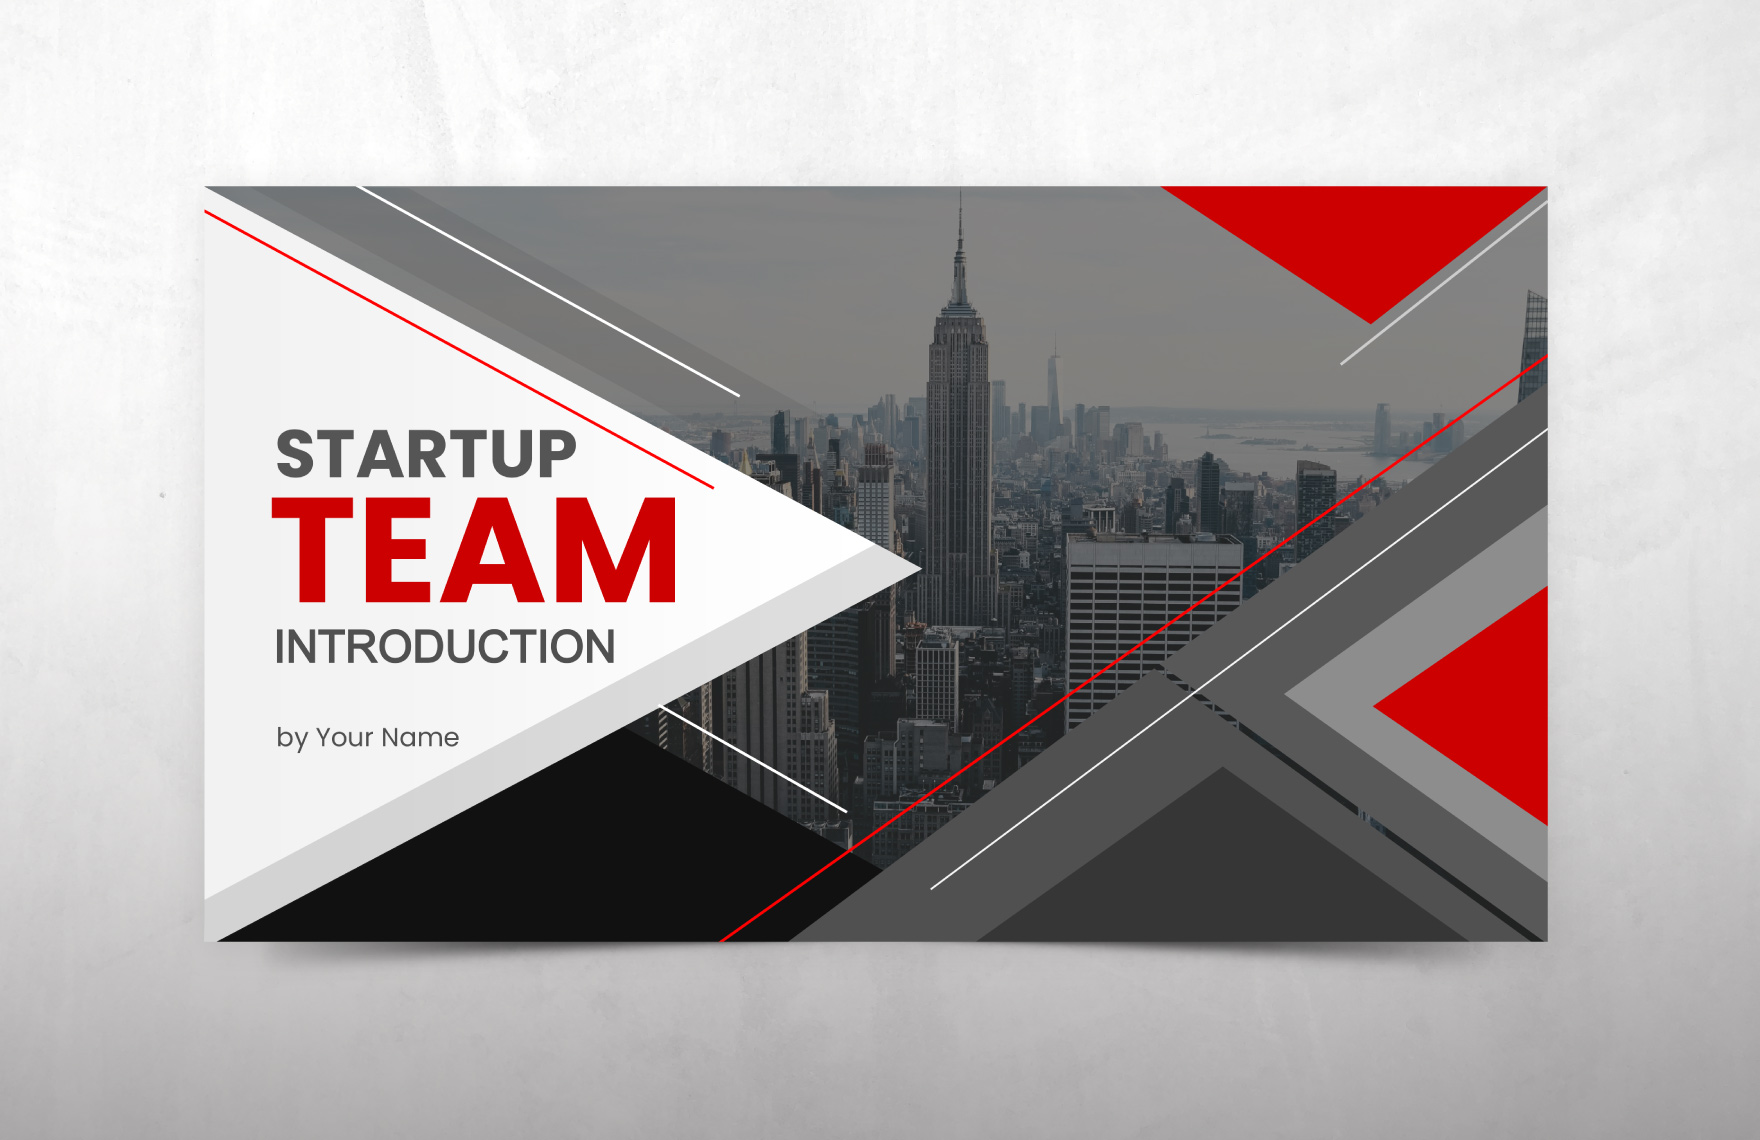 Startup Team Introduction Presentation Template